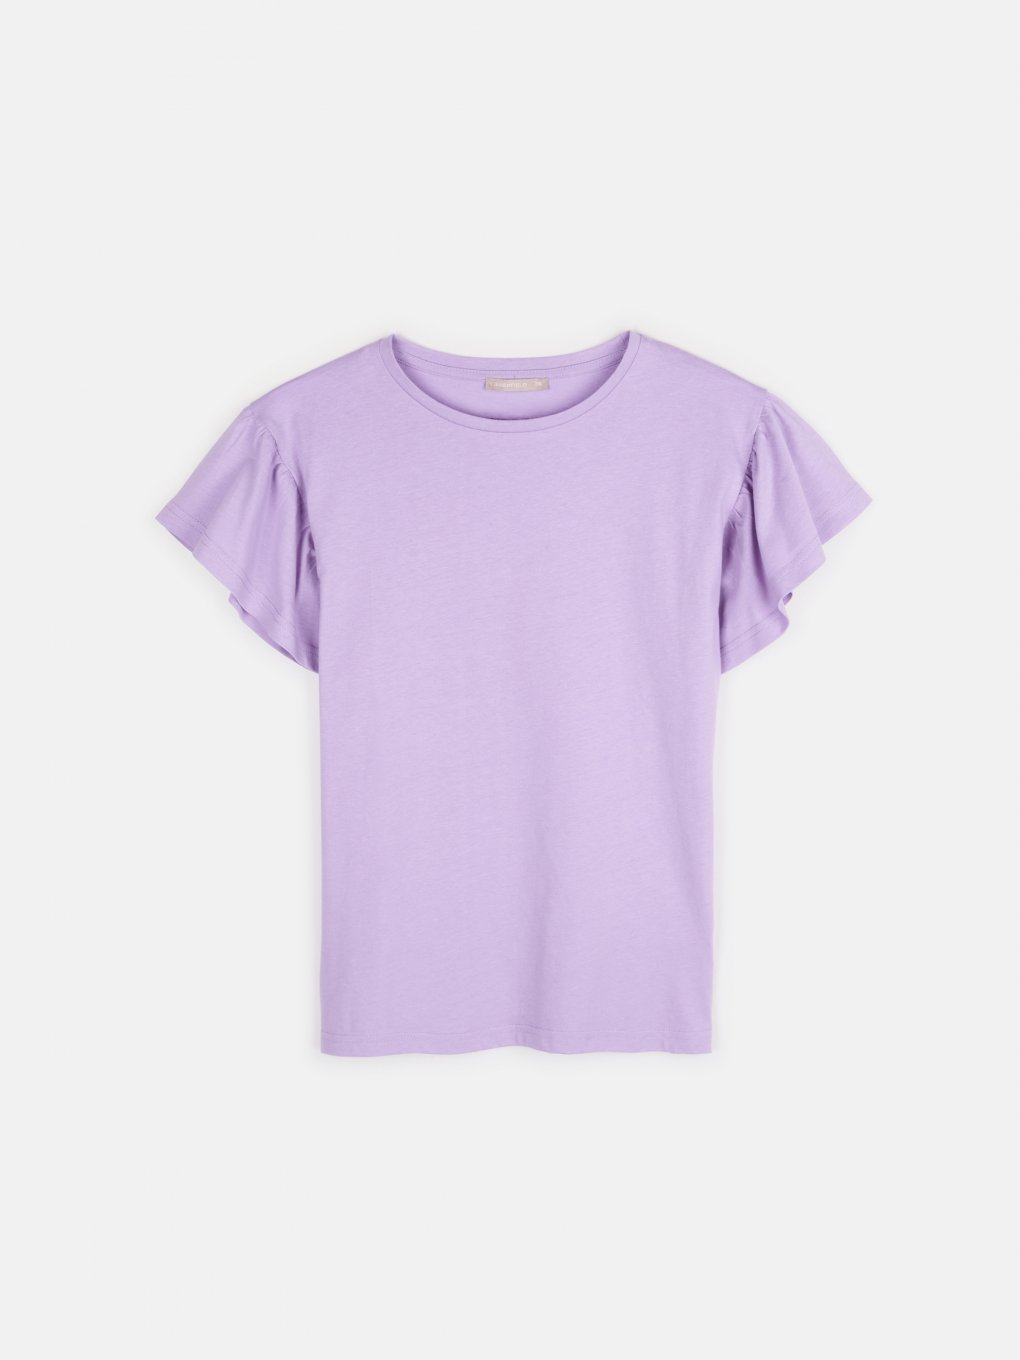 Jednobarevné dámské tričko s volánem